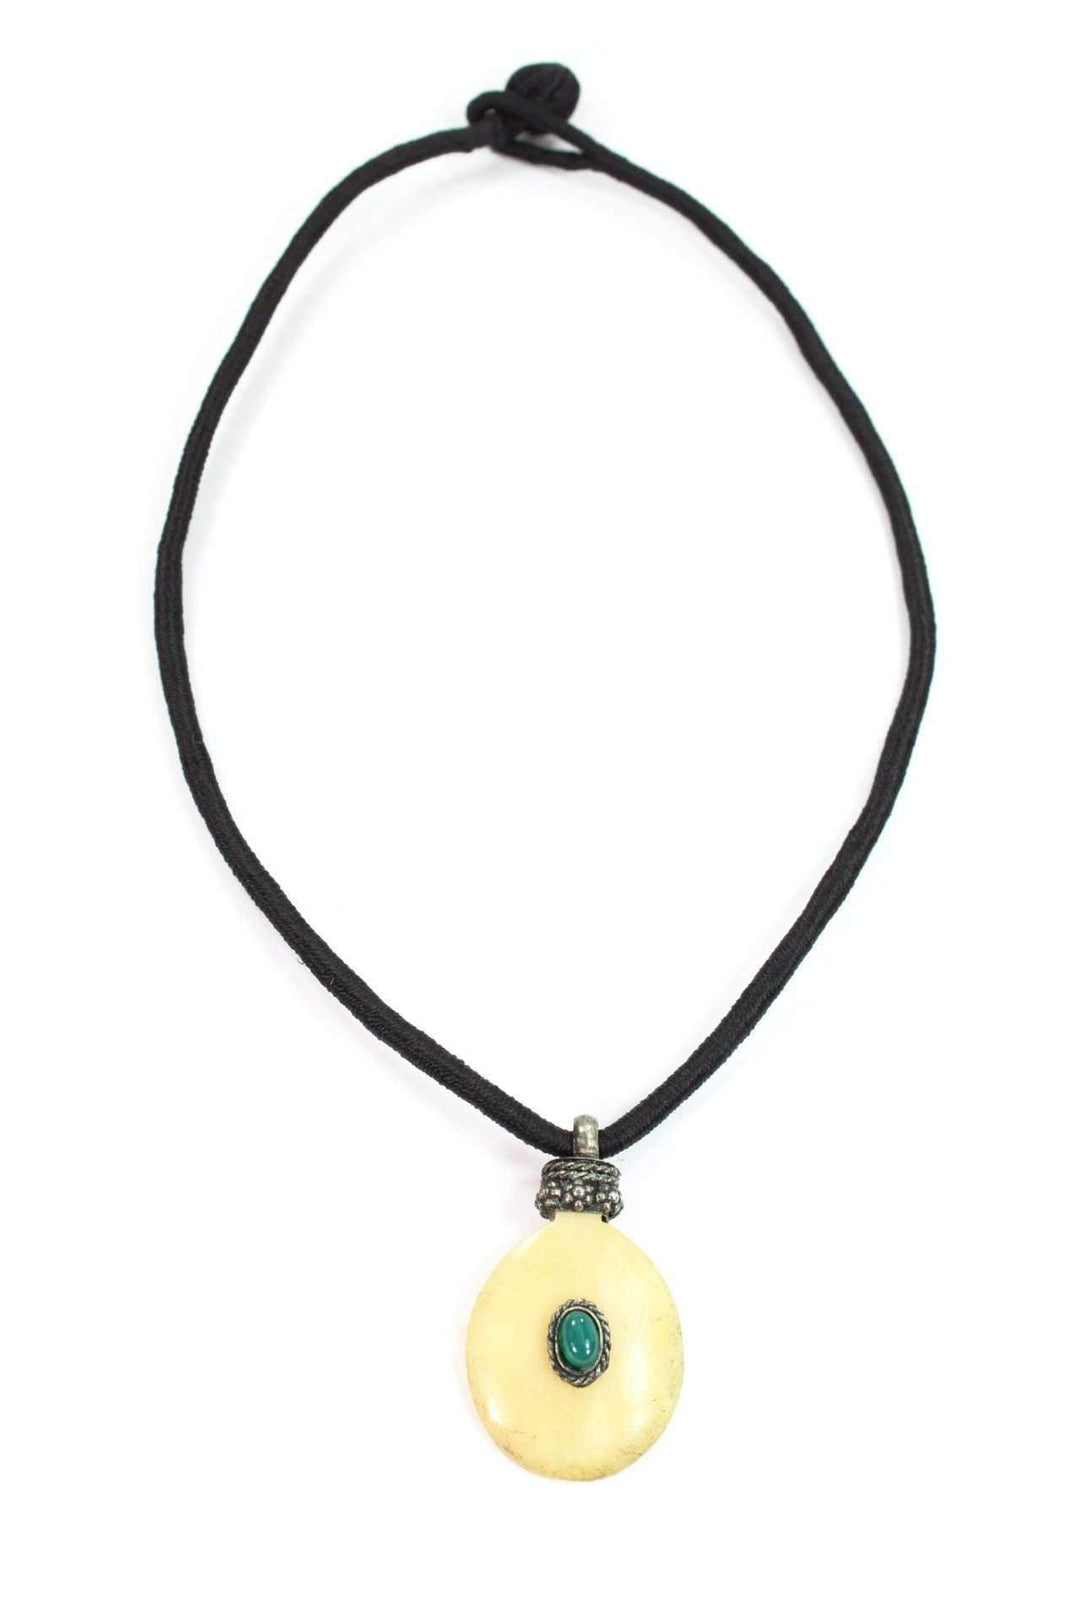 Oval Bone & Stone Tribal Pendant Necklace - Brand My Case